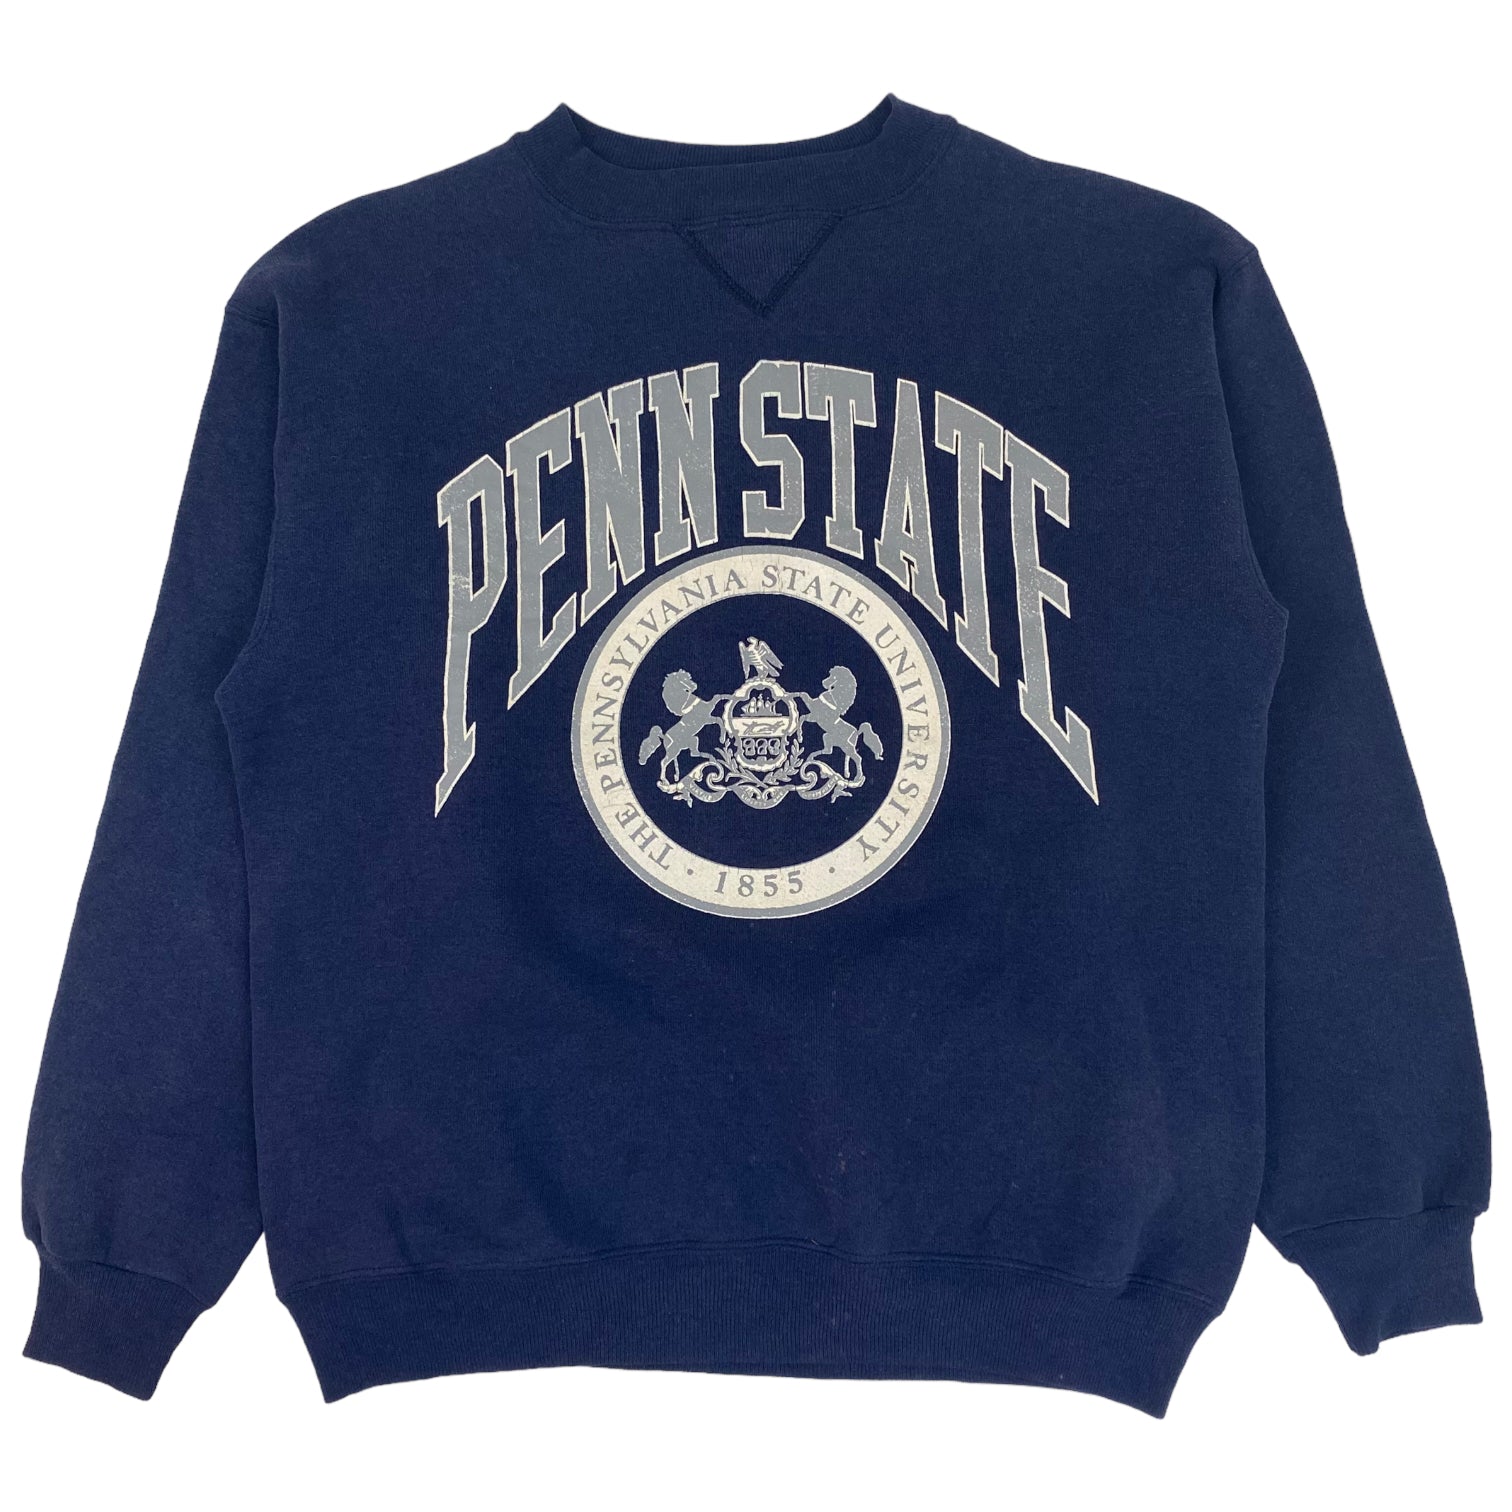 Vintage Penn State Collegiate Crewneck Navy